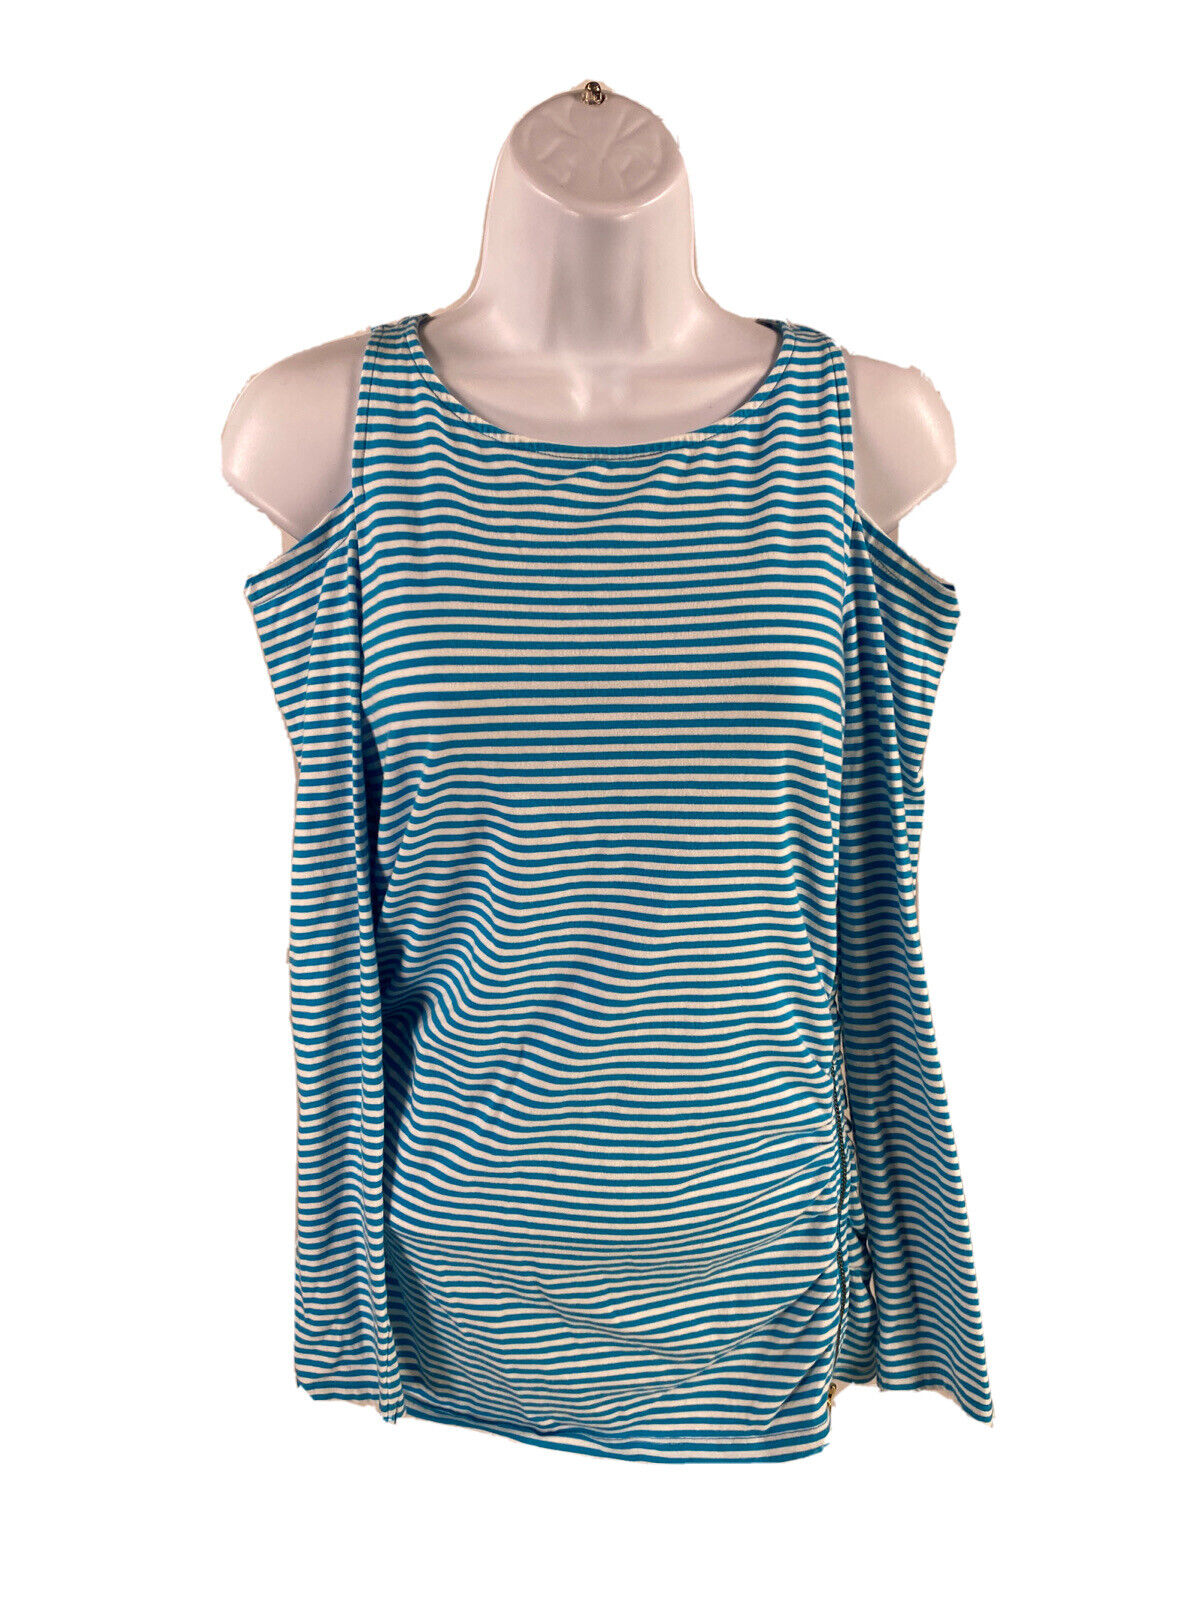 Michael Kors Camisa con cremallera lateral y hombros descubiertos a rayas azul/blanco para mujer - S